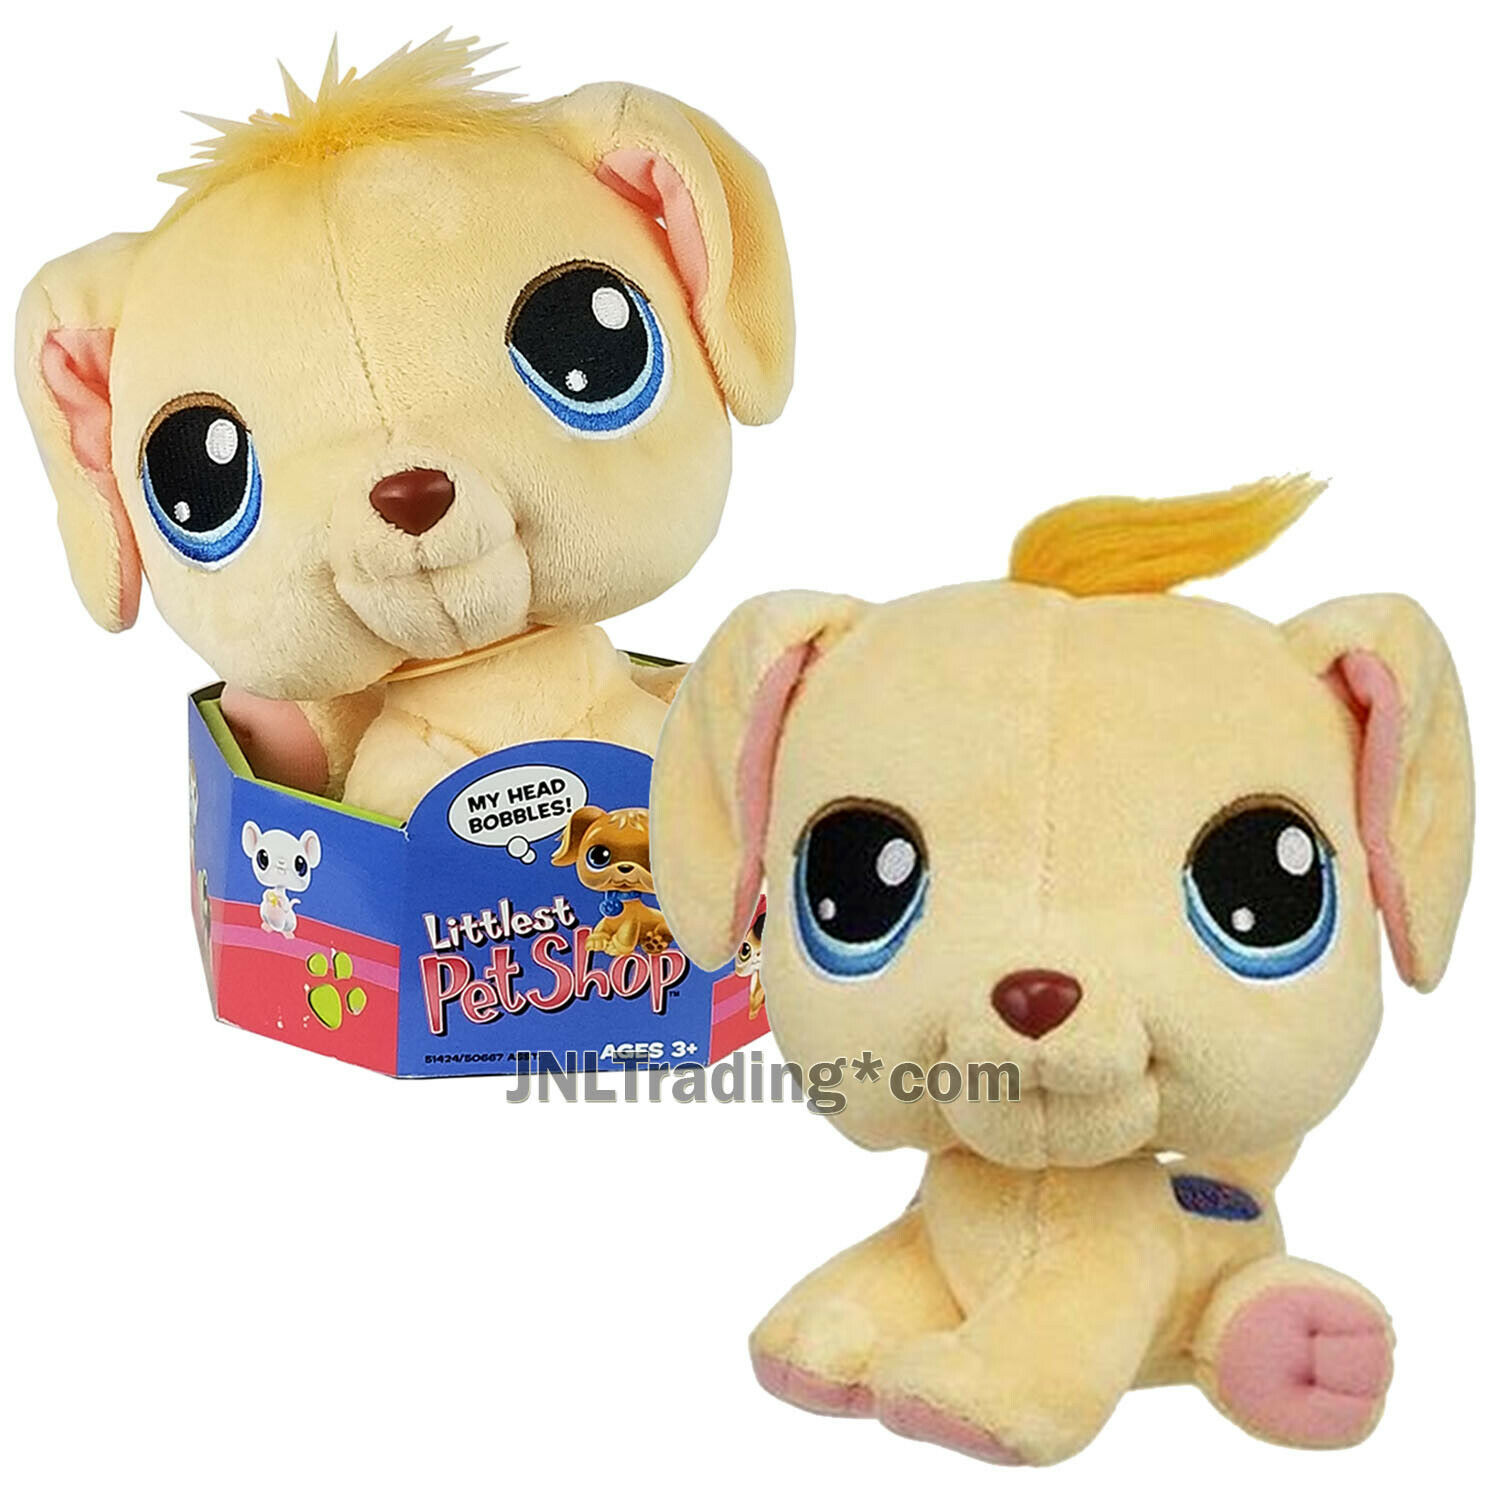 Cute lps Littlest Pet Shop Dog Hasbro Collection Child Figure Toy GIFT #KJ8 